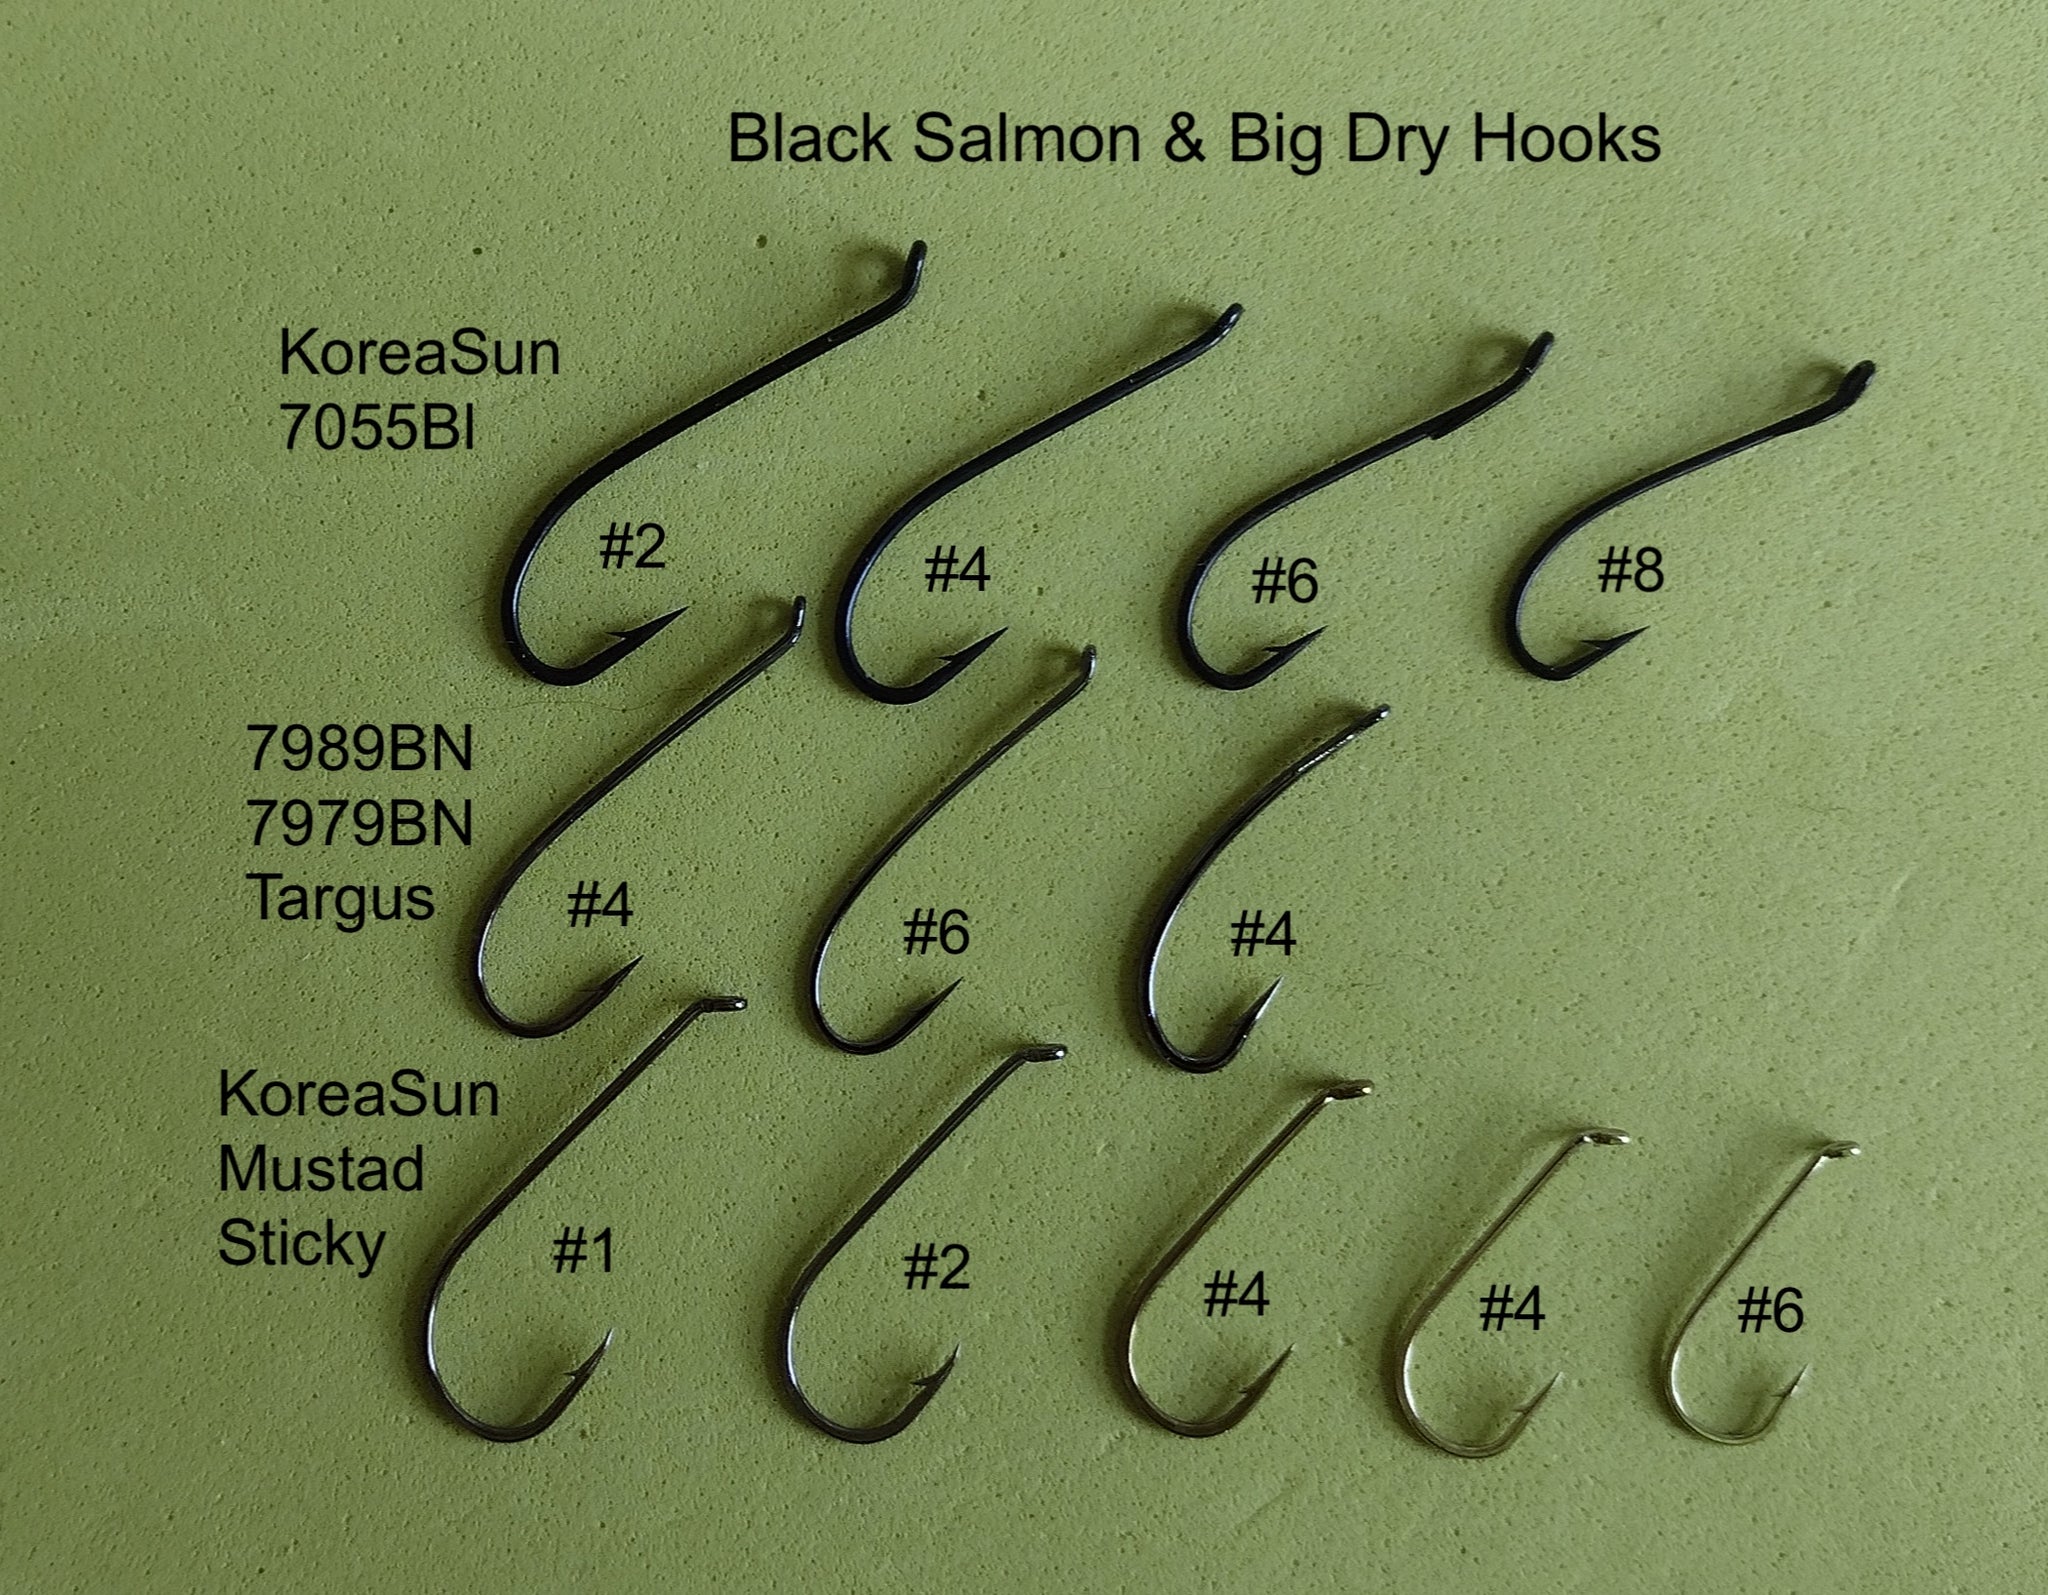 Up Eye Salmon Hooks, Big Dry Fly Hooks